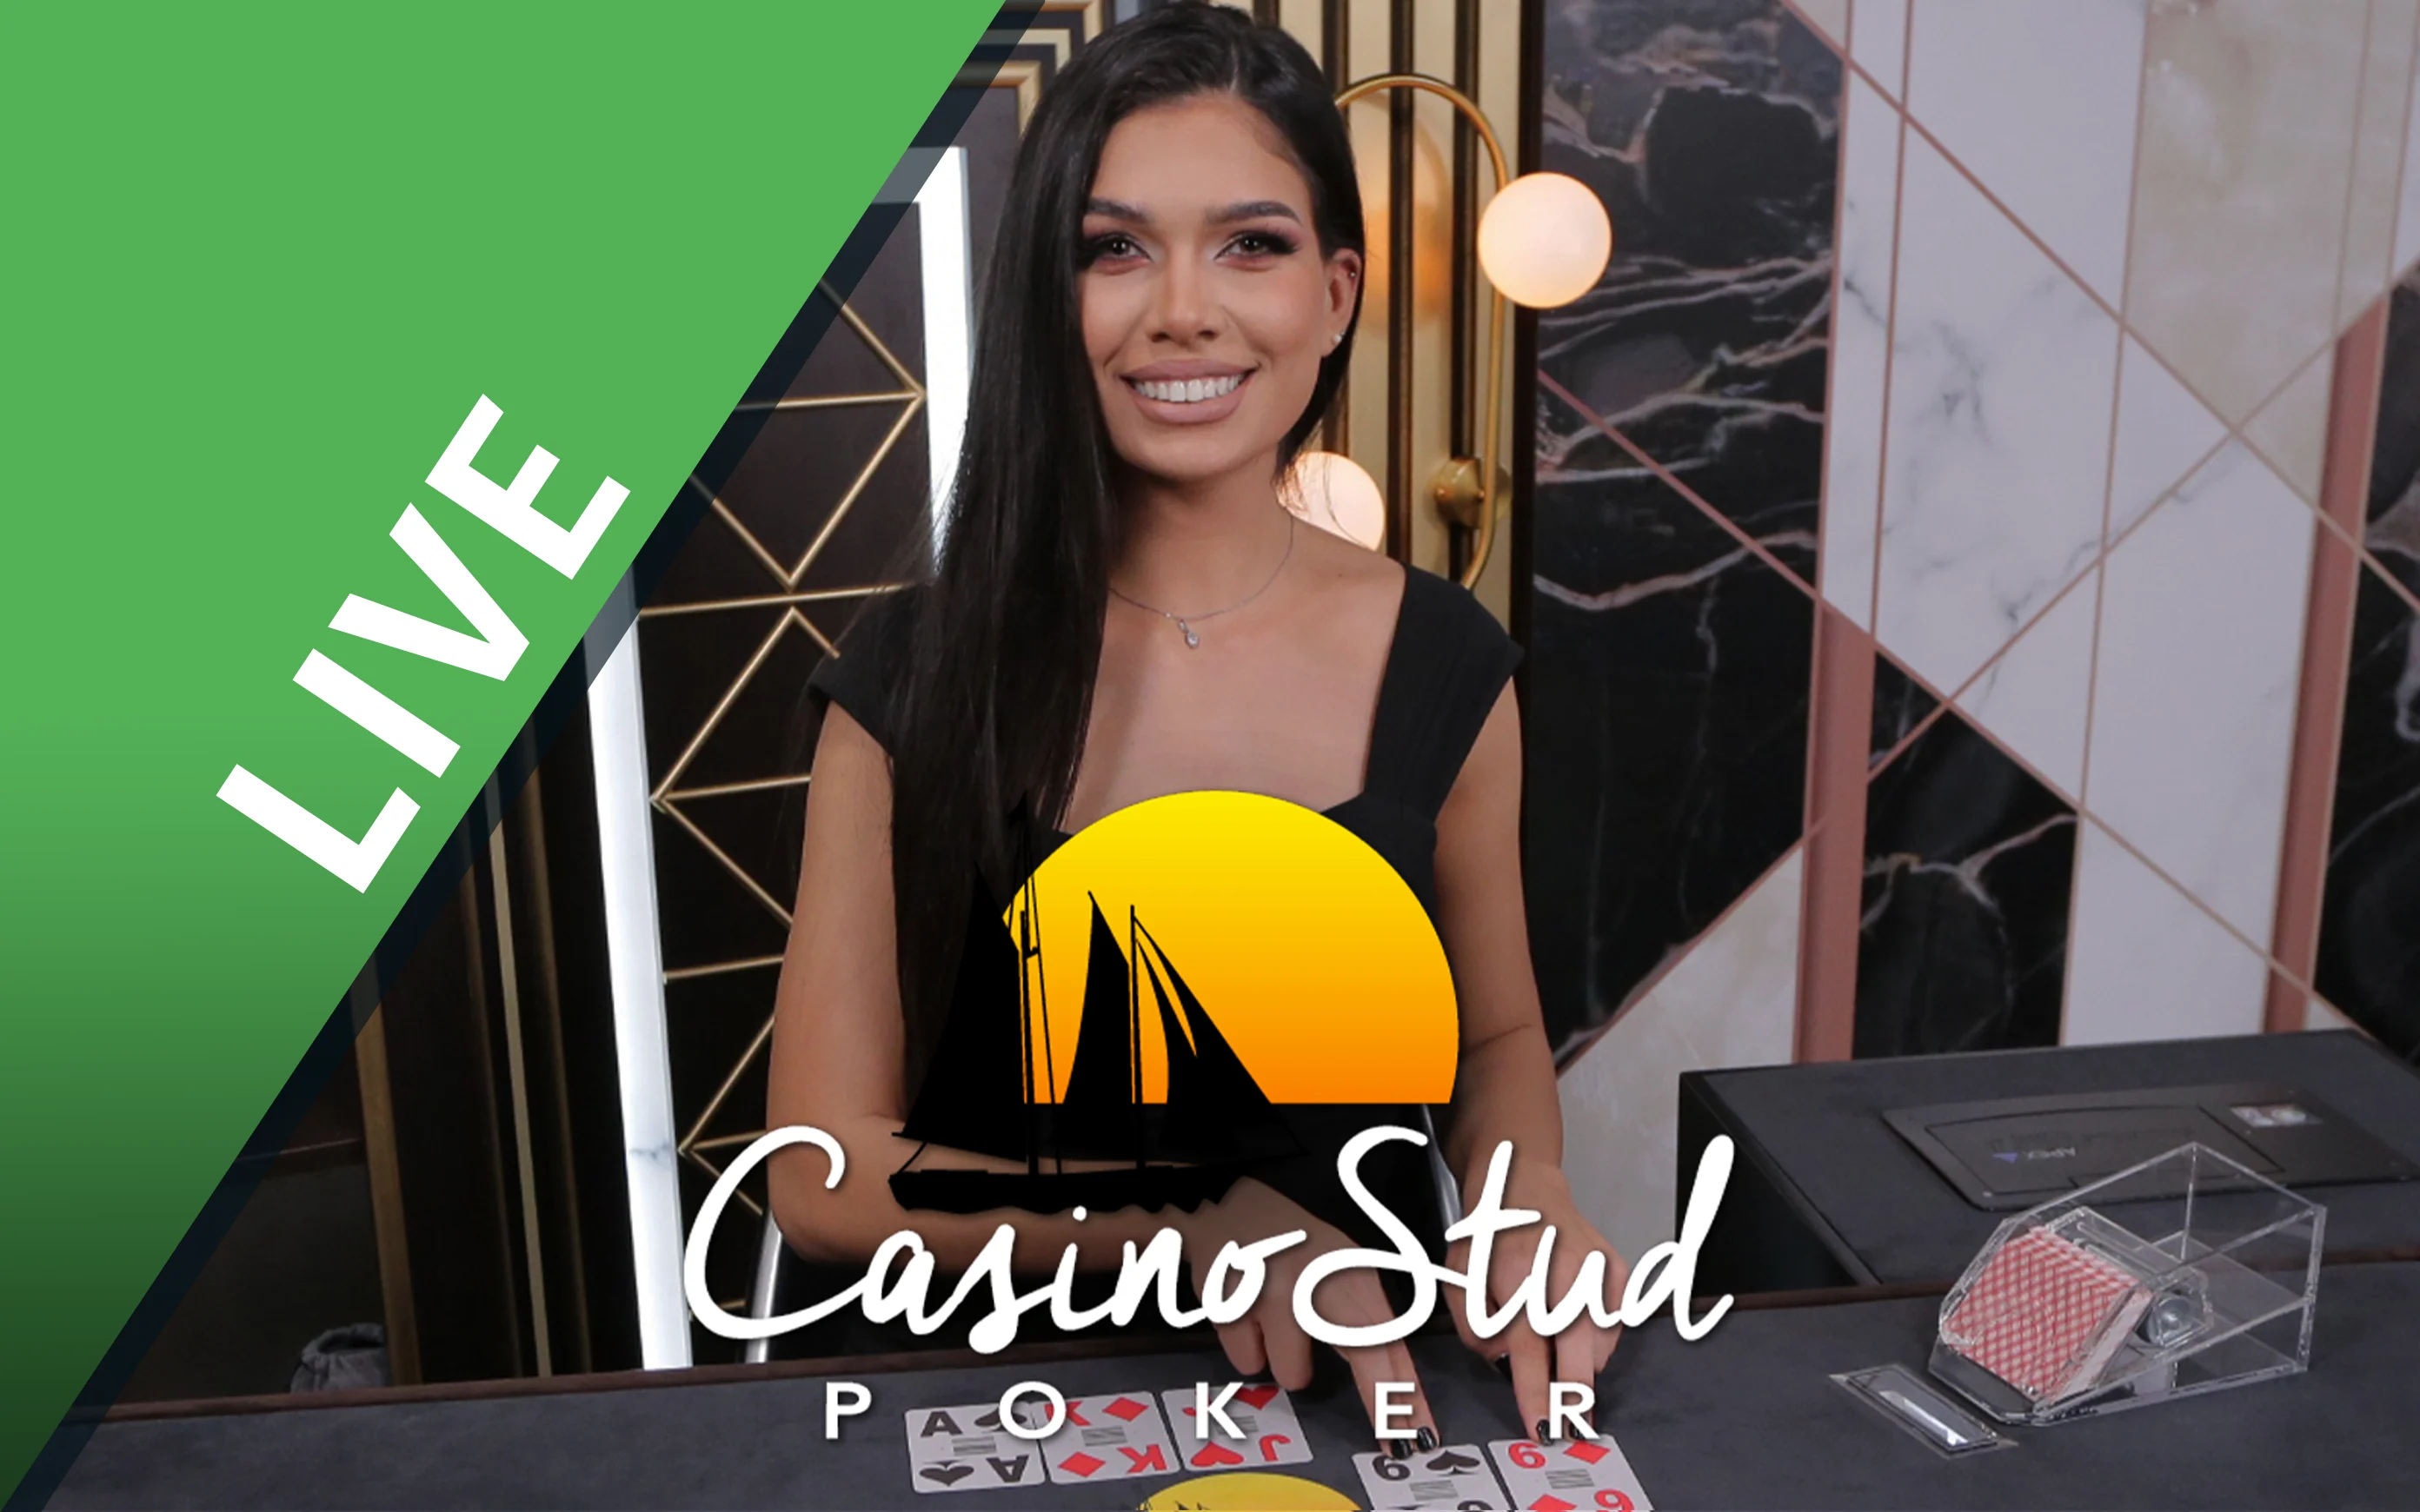 Starcasino.be online casino üzerinden Casino Stud Poker oynayın